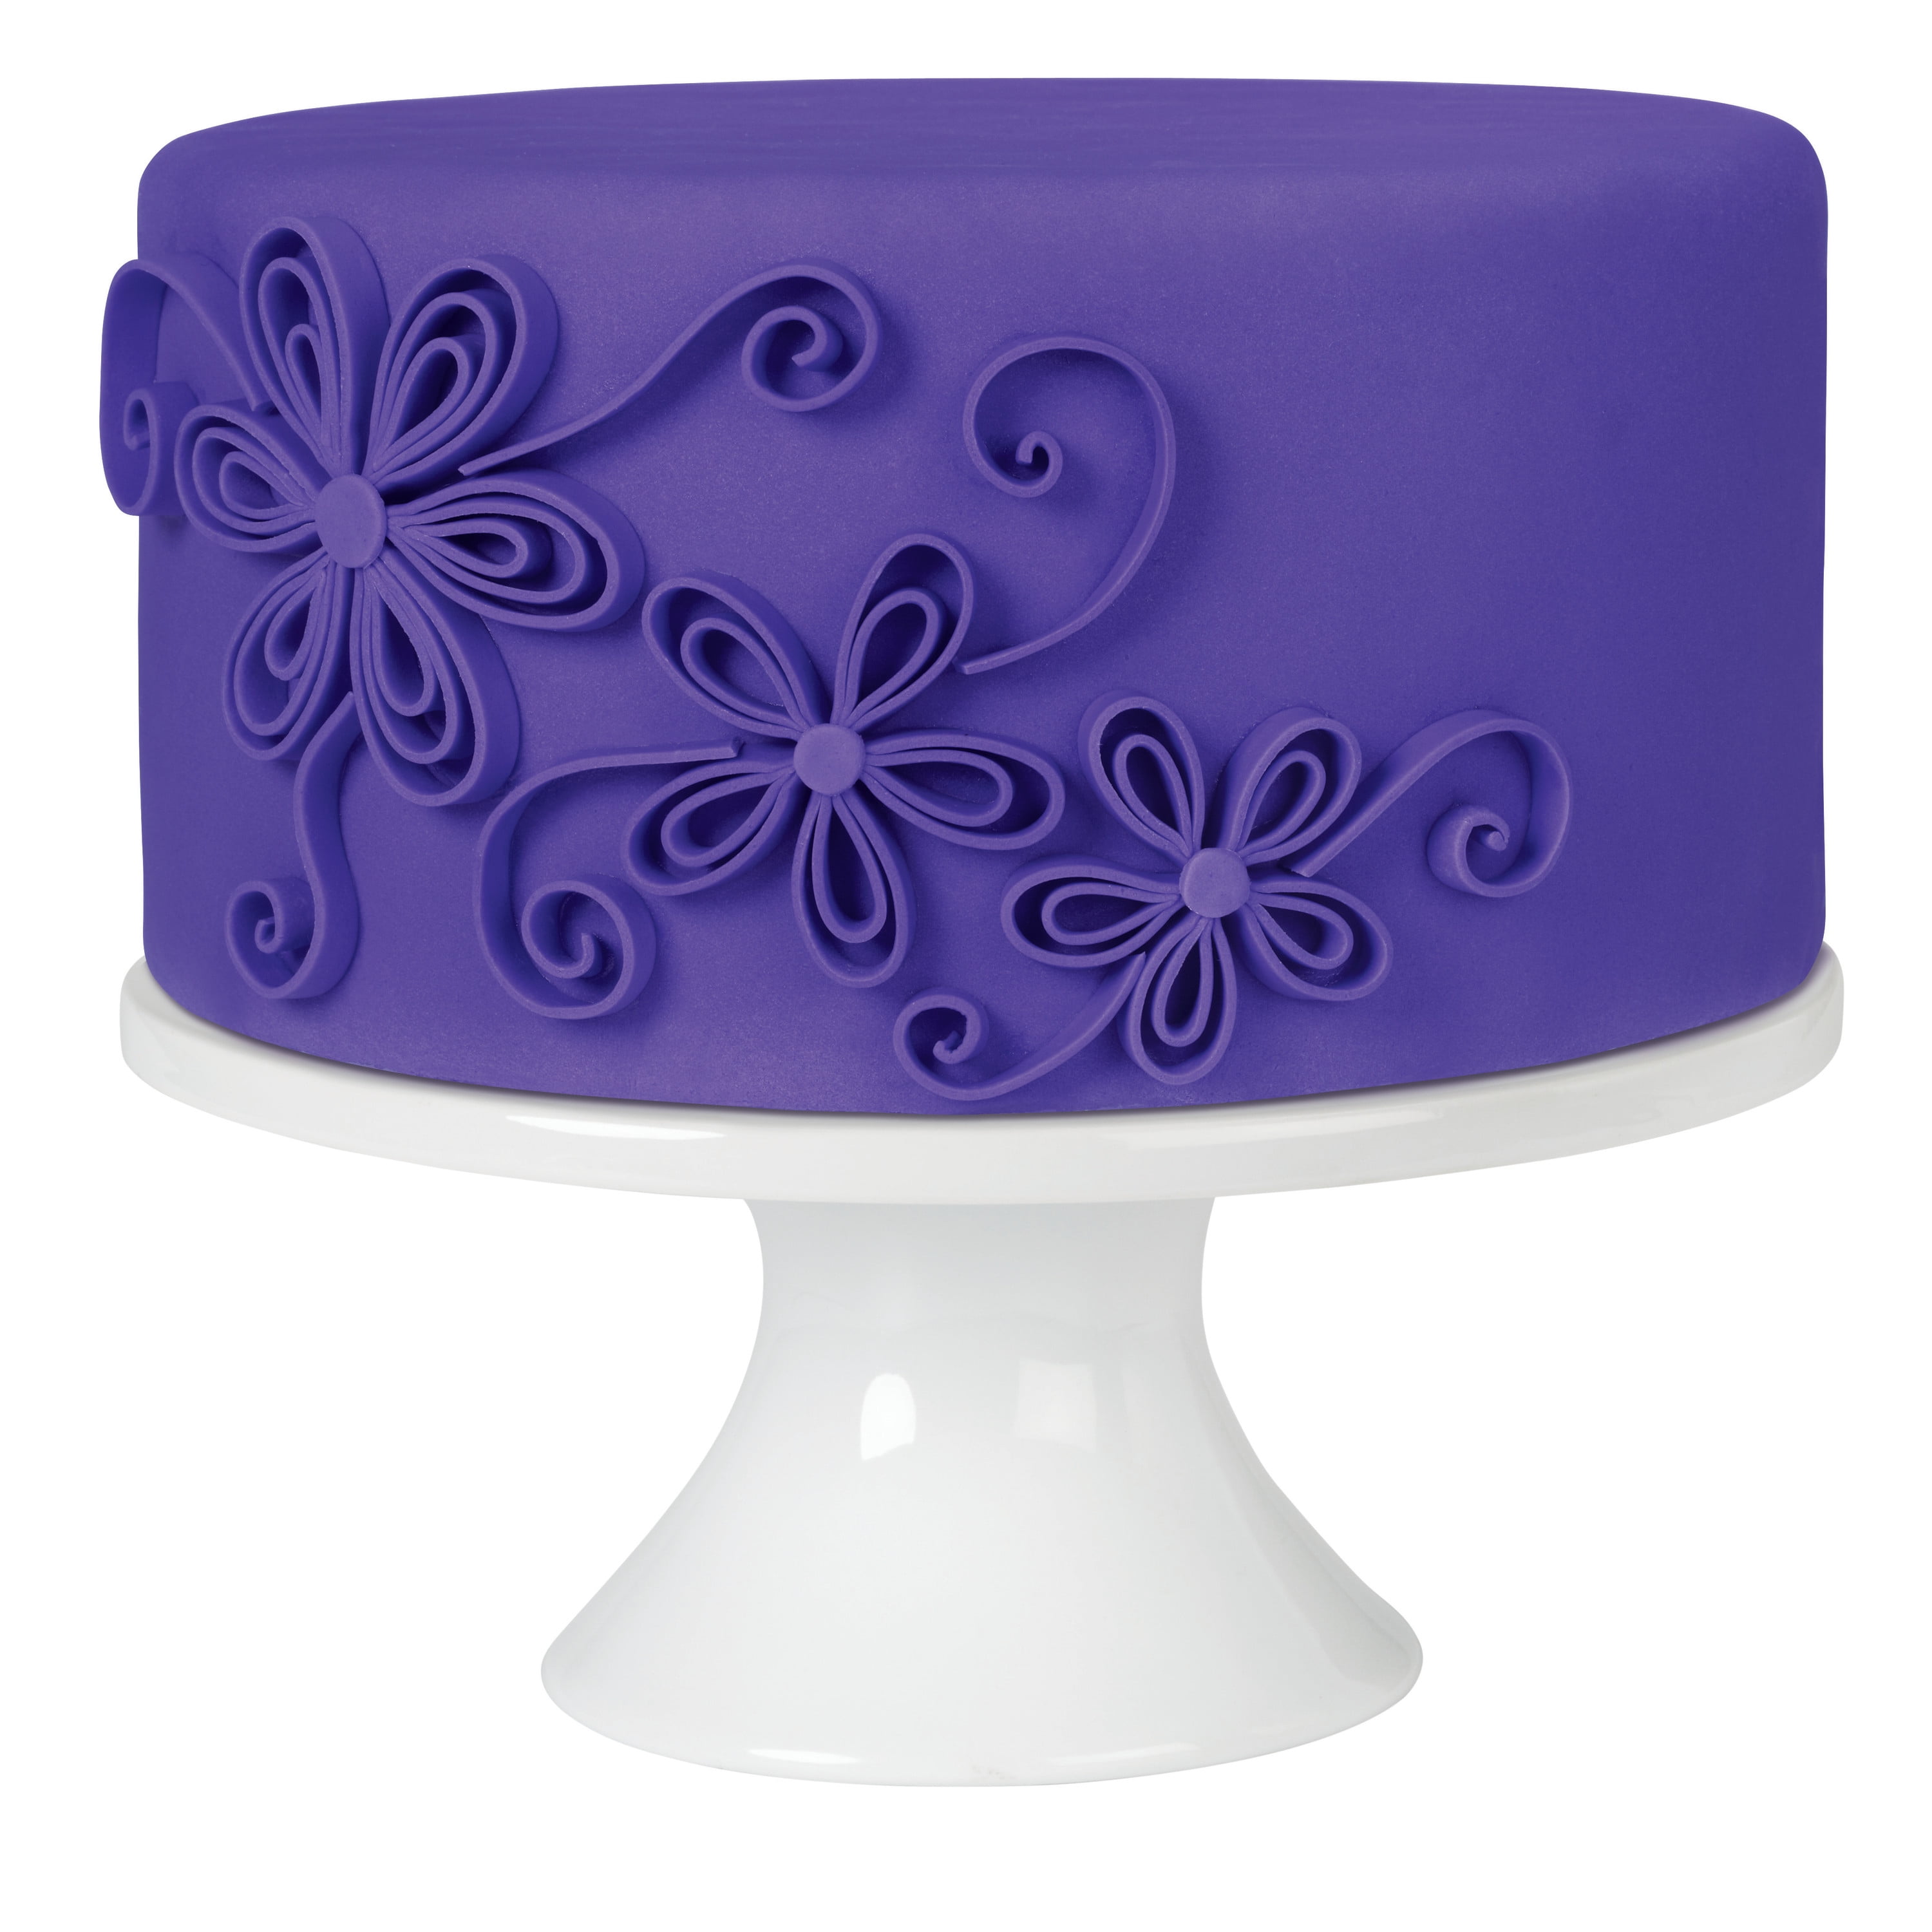 Midnight Black Luxury Edible Cake Glitter – 5 Grams - Vegan, Kosher - Cakes, Cupcakes, Fondant, Decorating, Cake Pops, Candy, USA Made